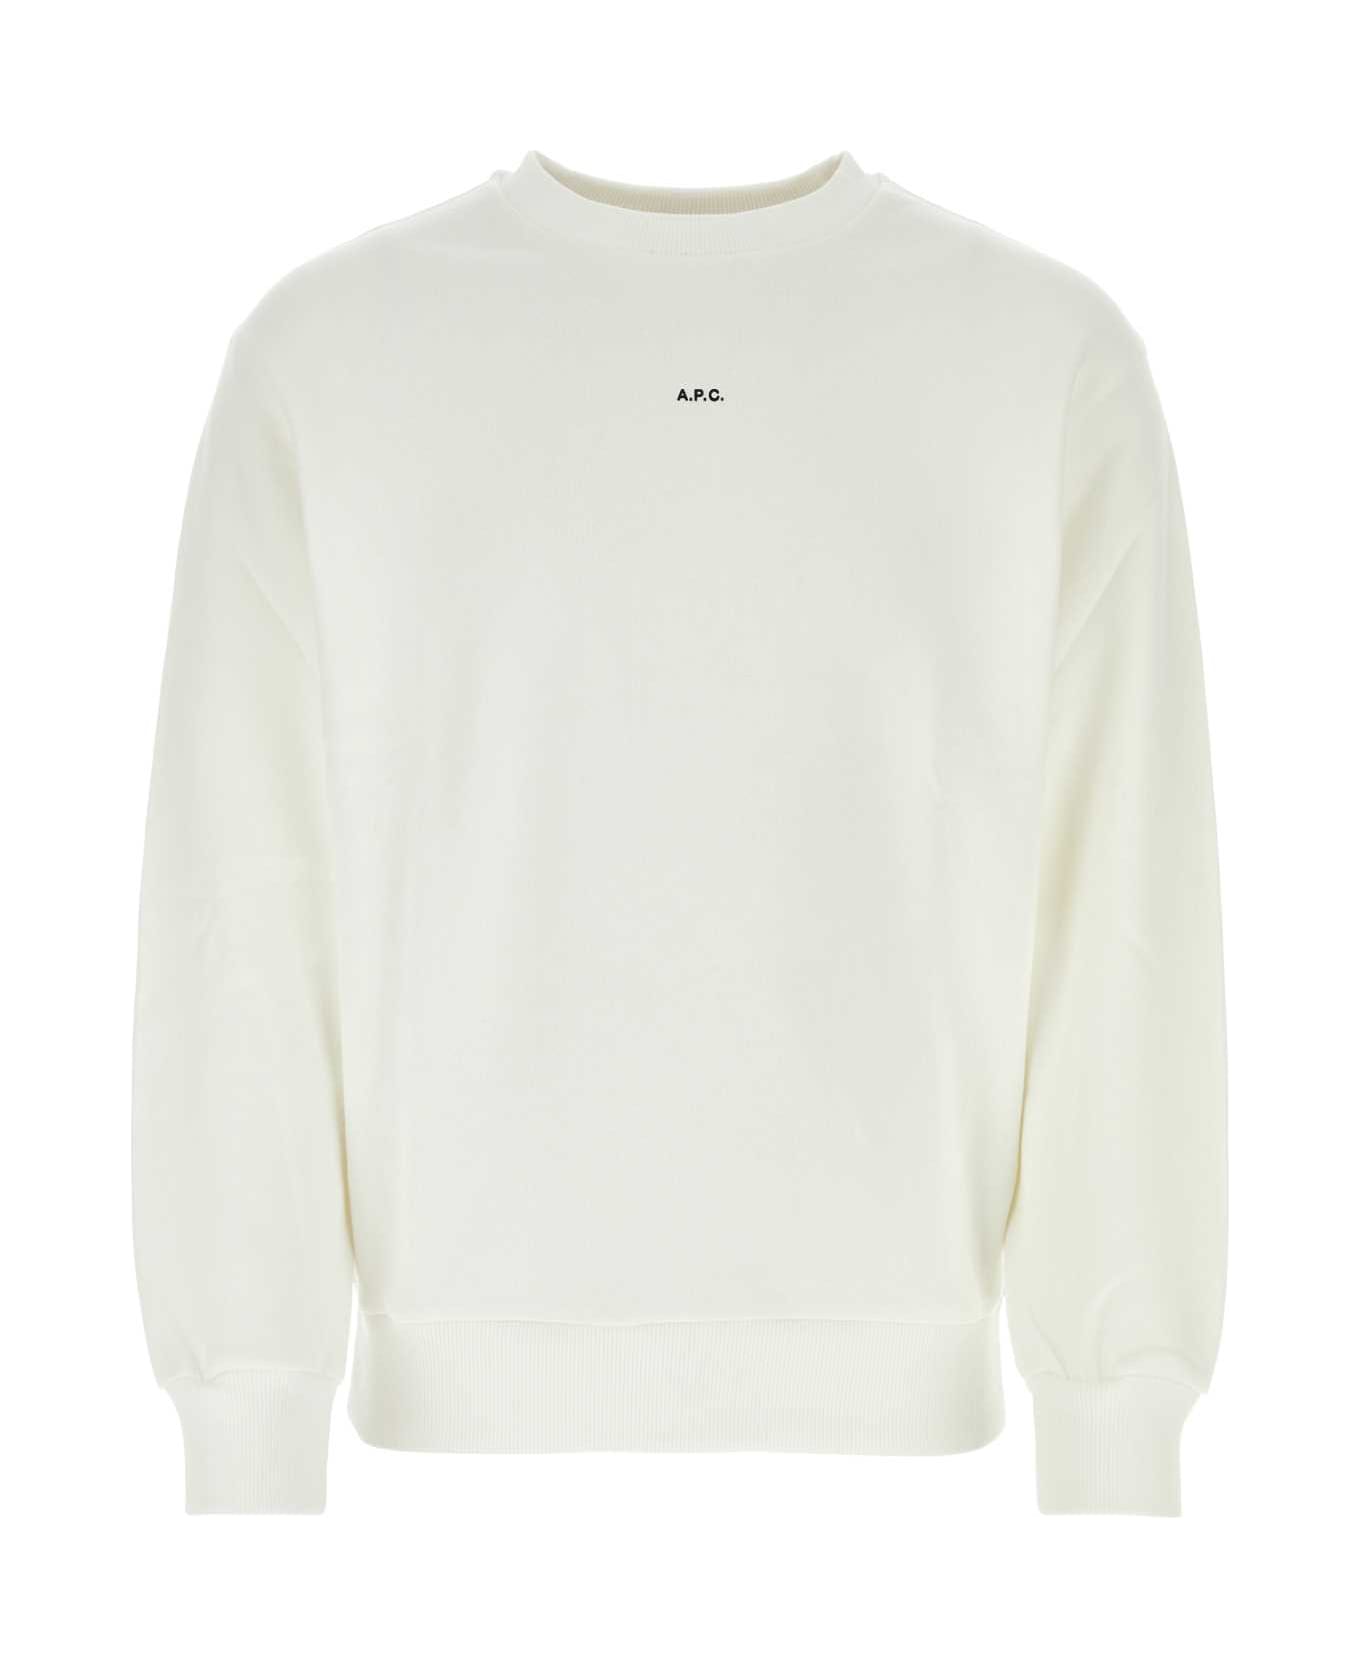 A.P.C. White Cotton Sweatshirt - BLANCNOIR